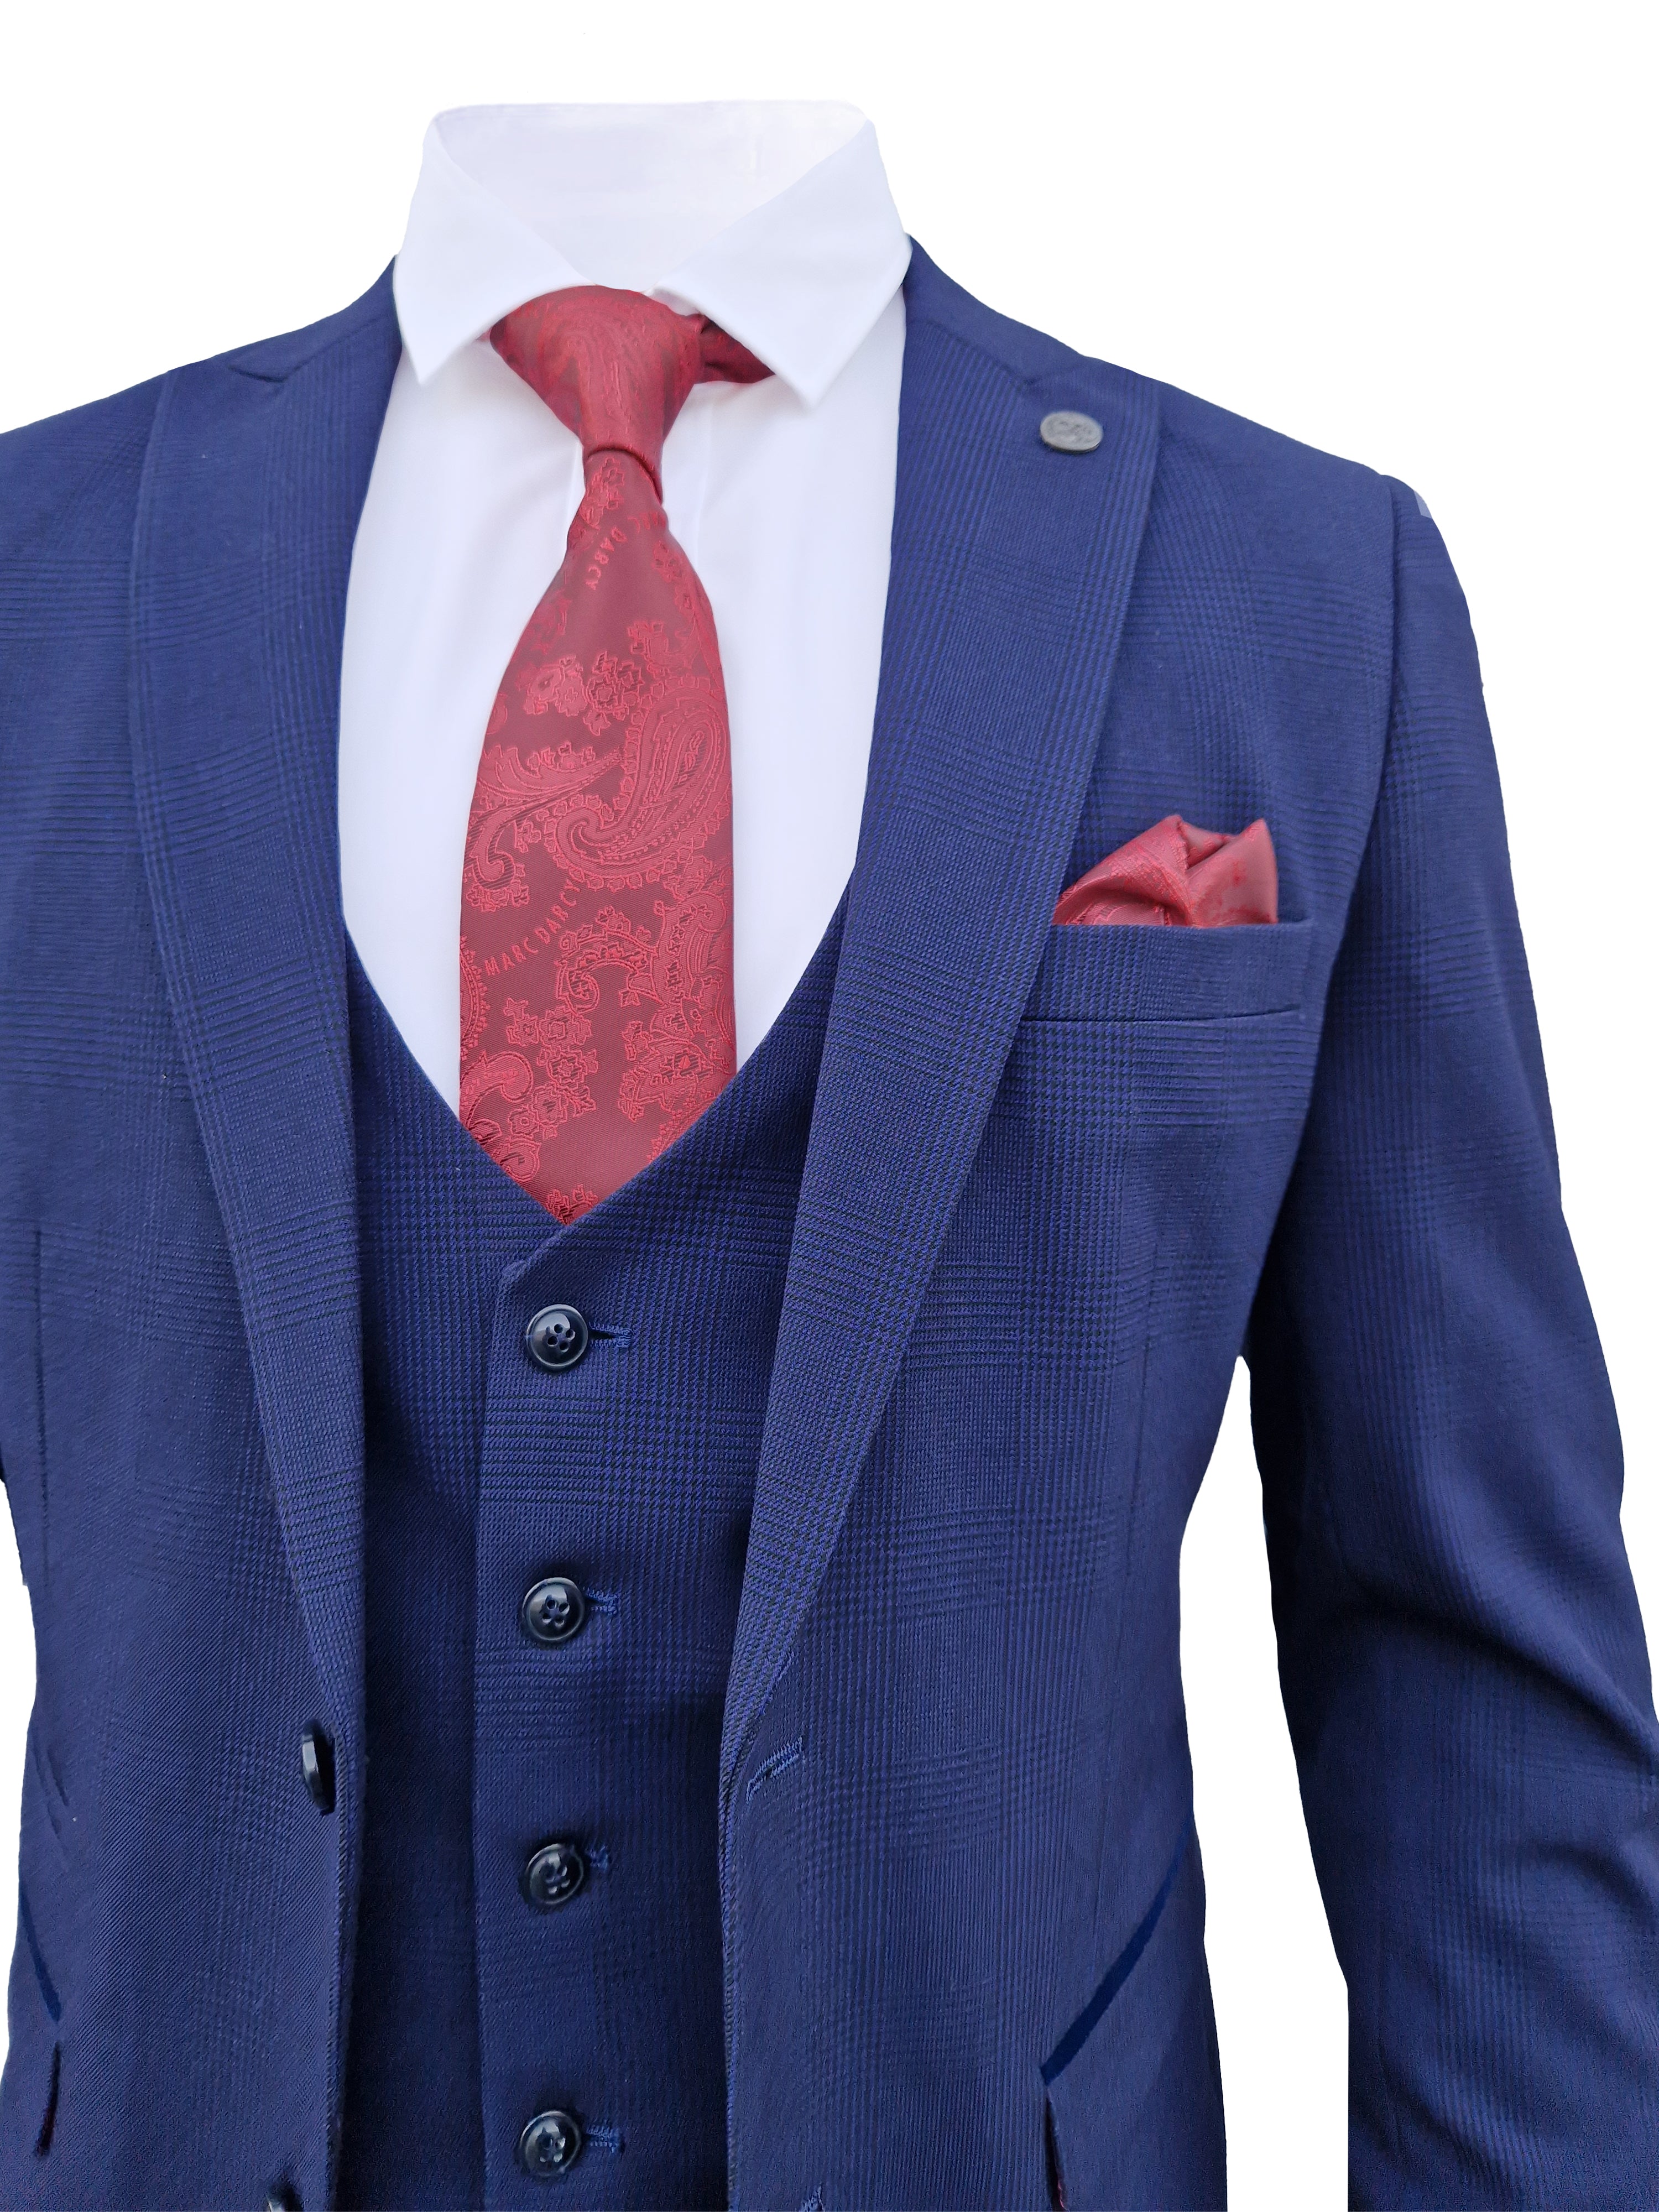 3-Piece Dark Blue Men's Checkered Suit - Bromley Navy Suit